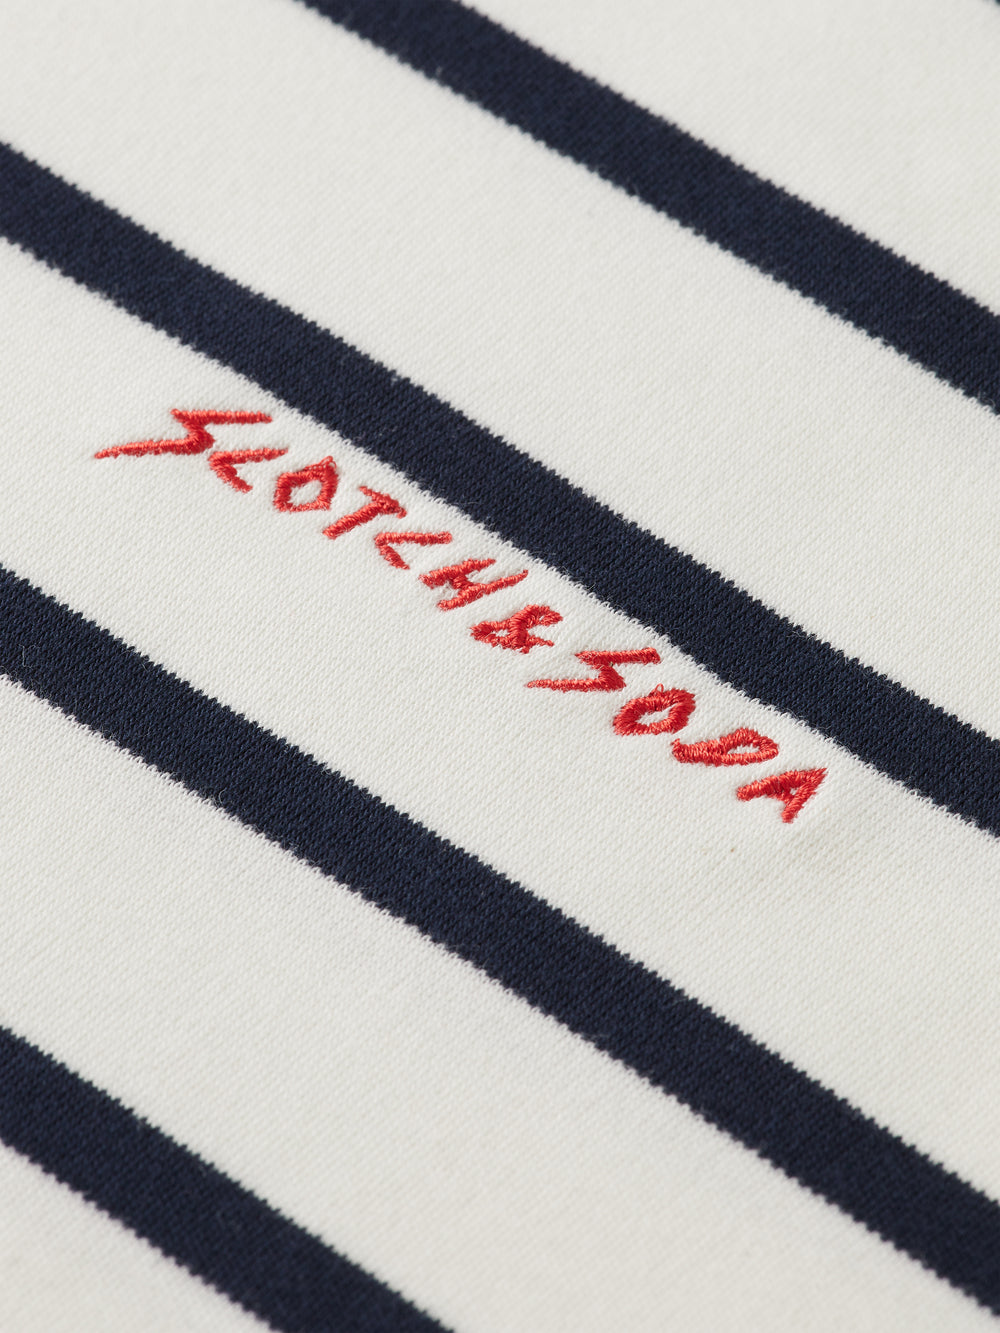 Striped long sleeved t-shirt - Scotch & Soda AU